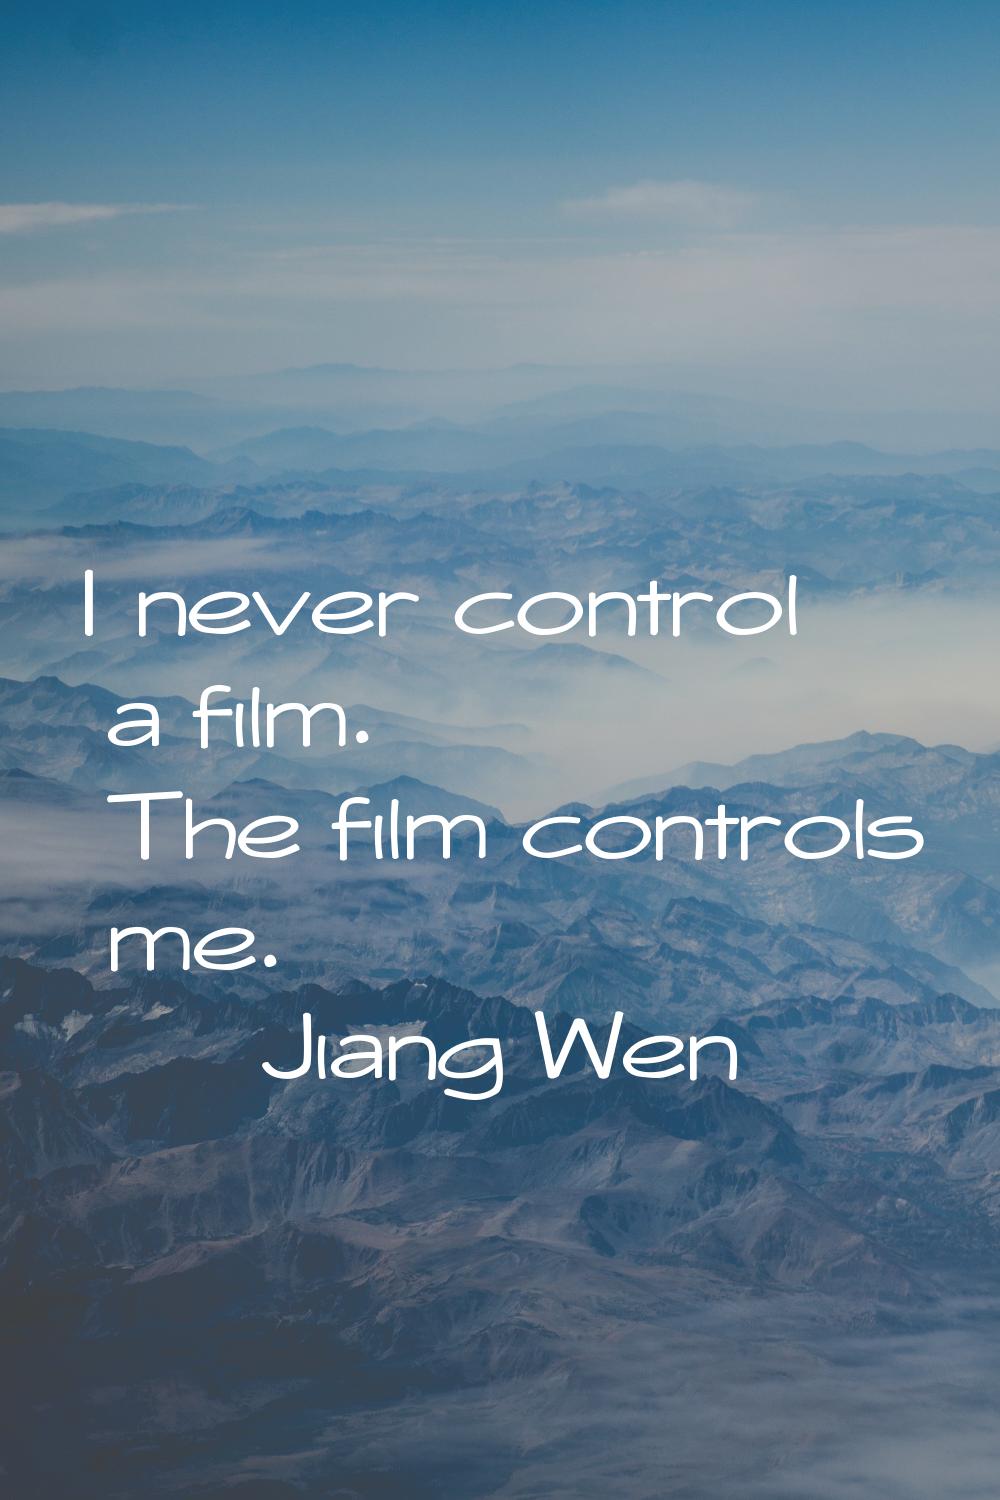 I never control a film. The film controls me.